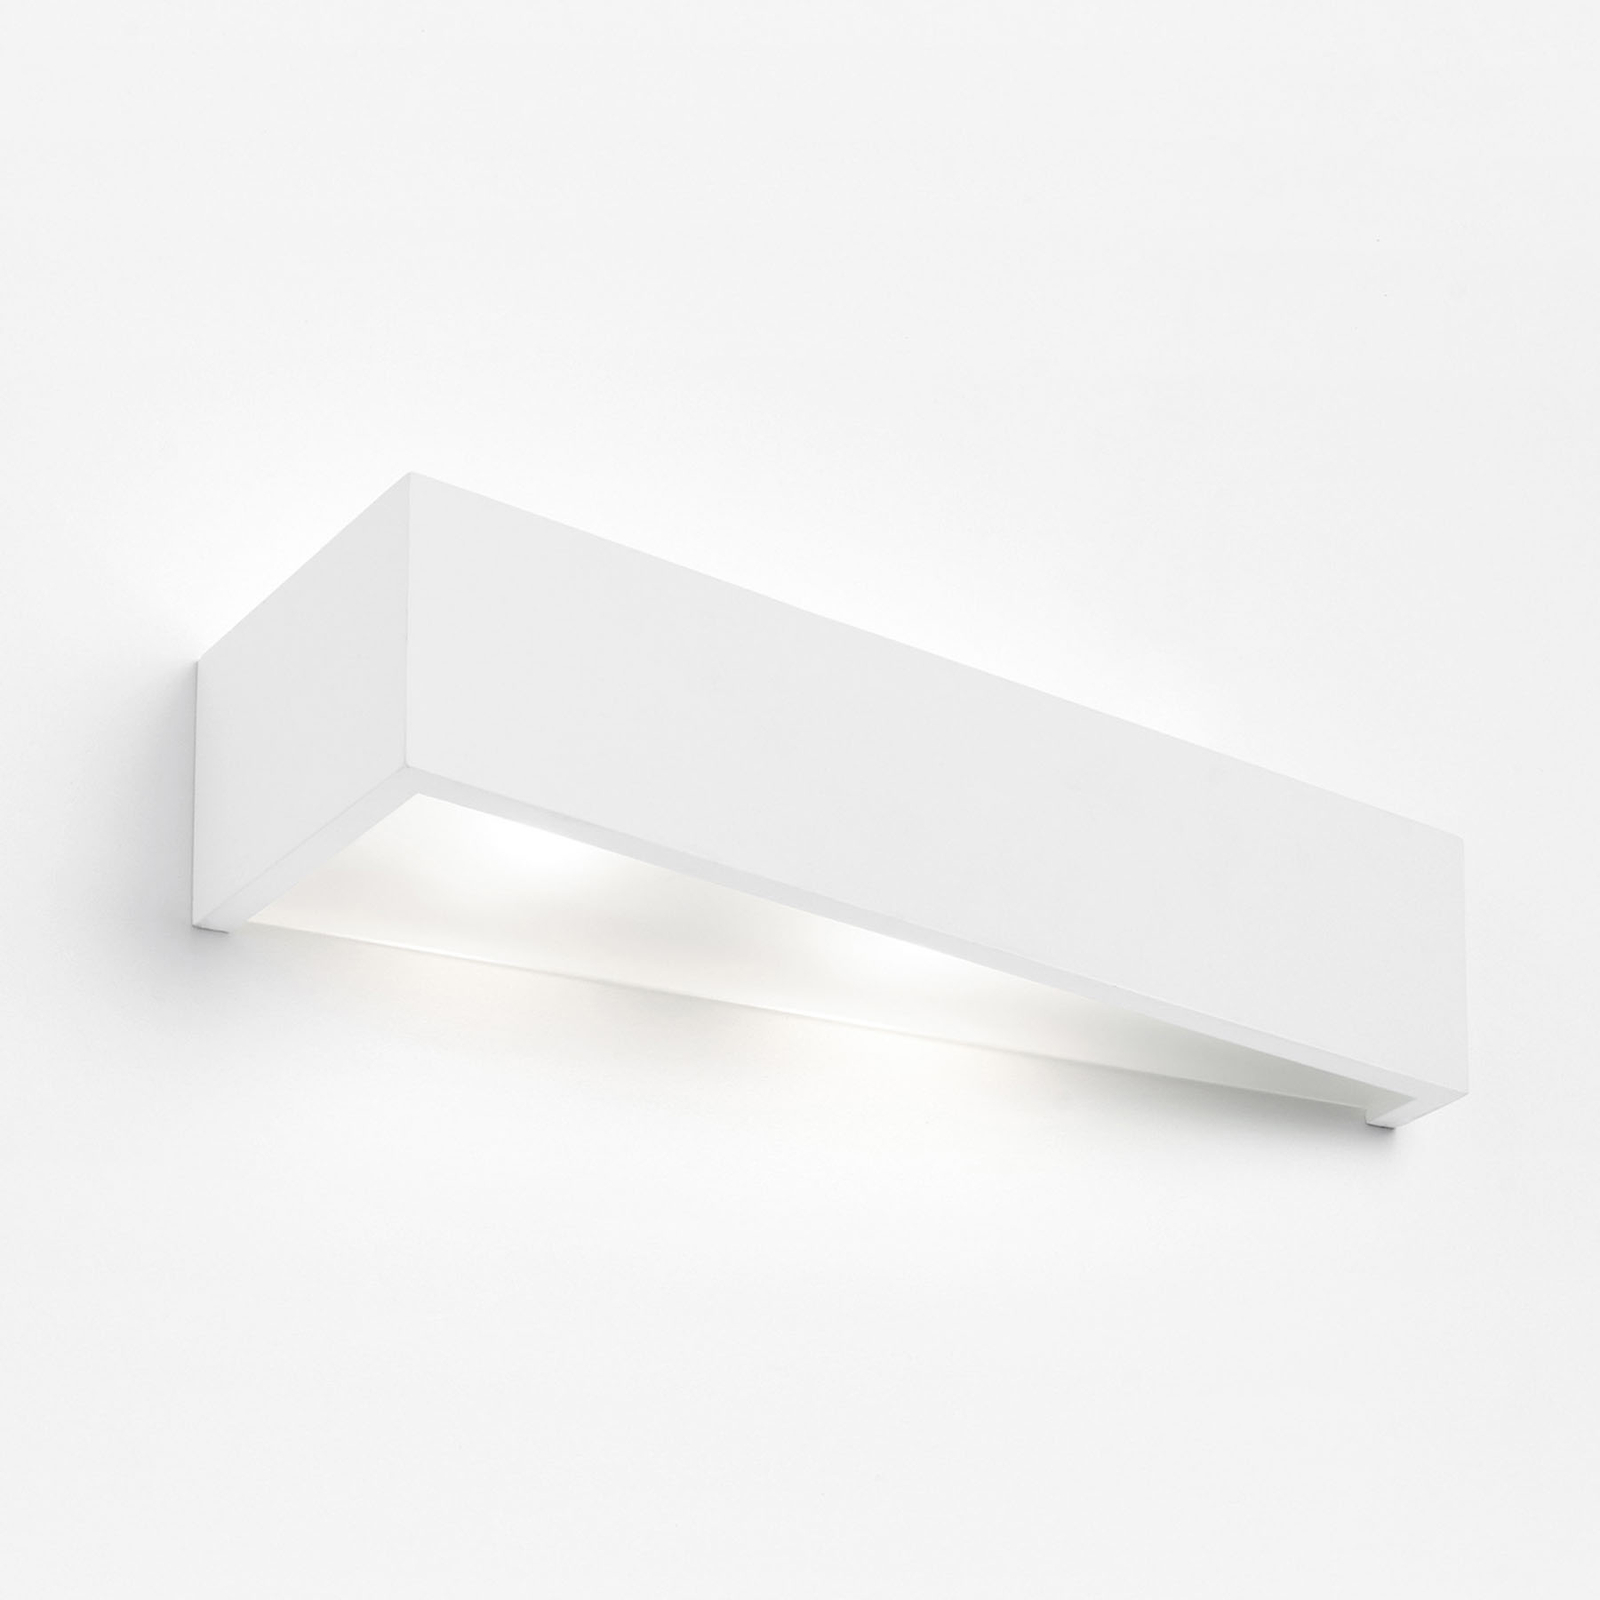 Teos wall light, width 34.5 cm